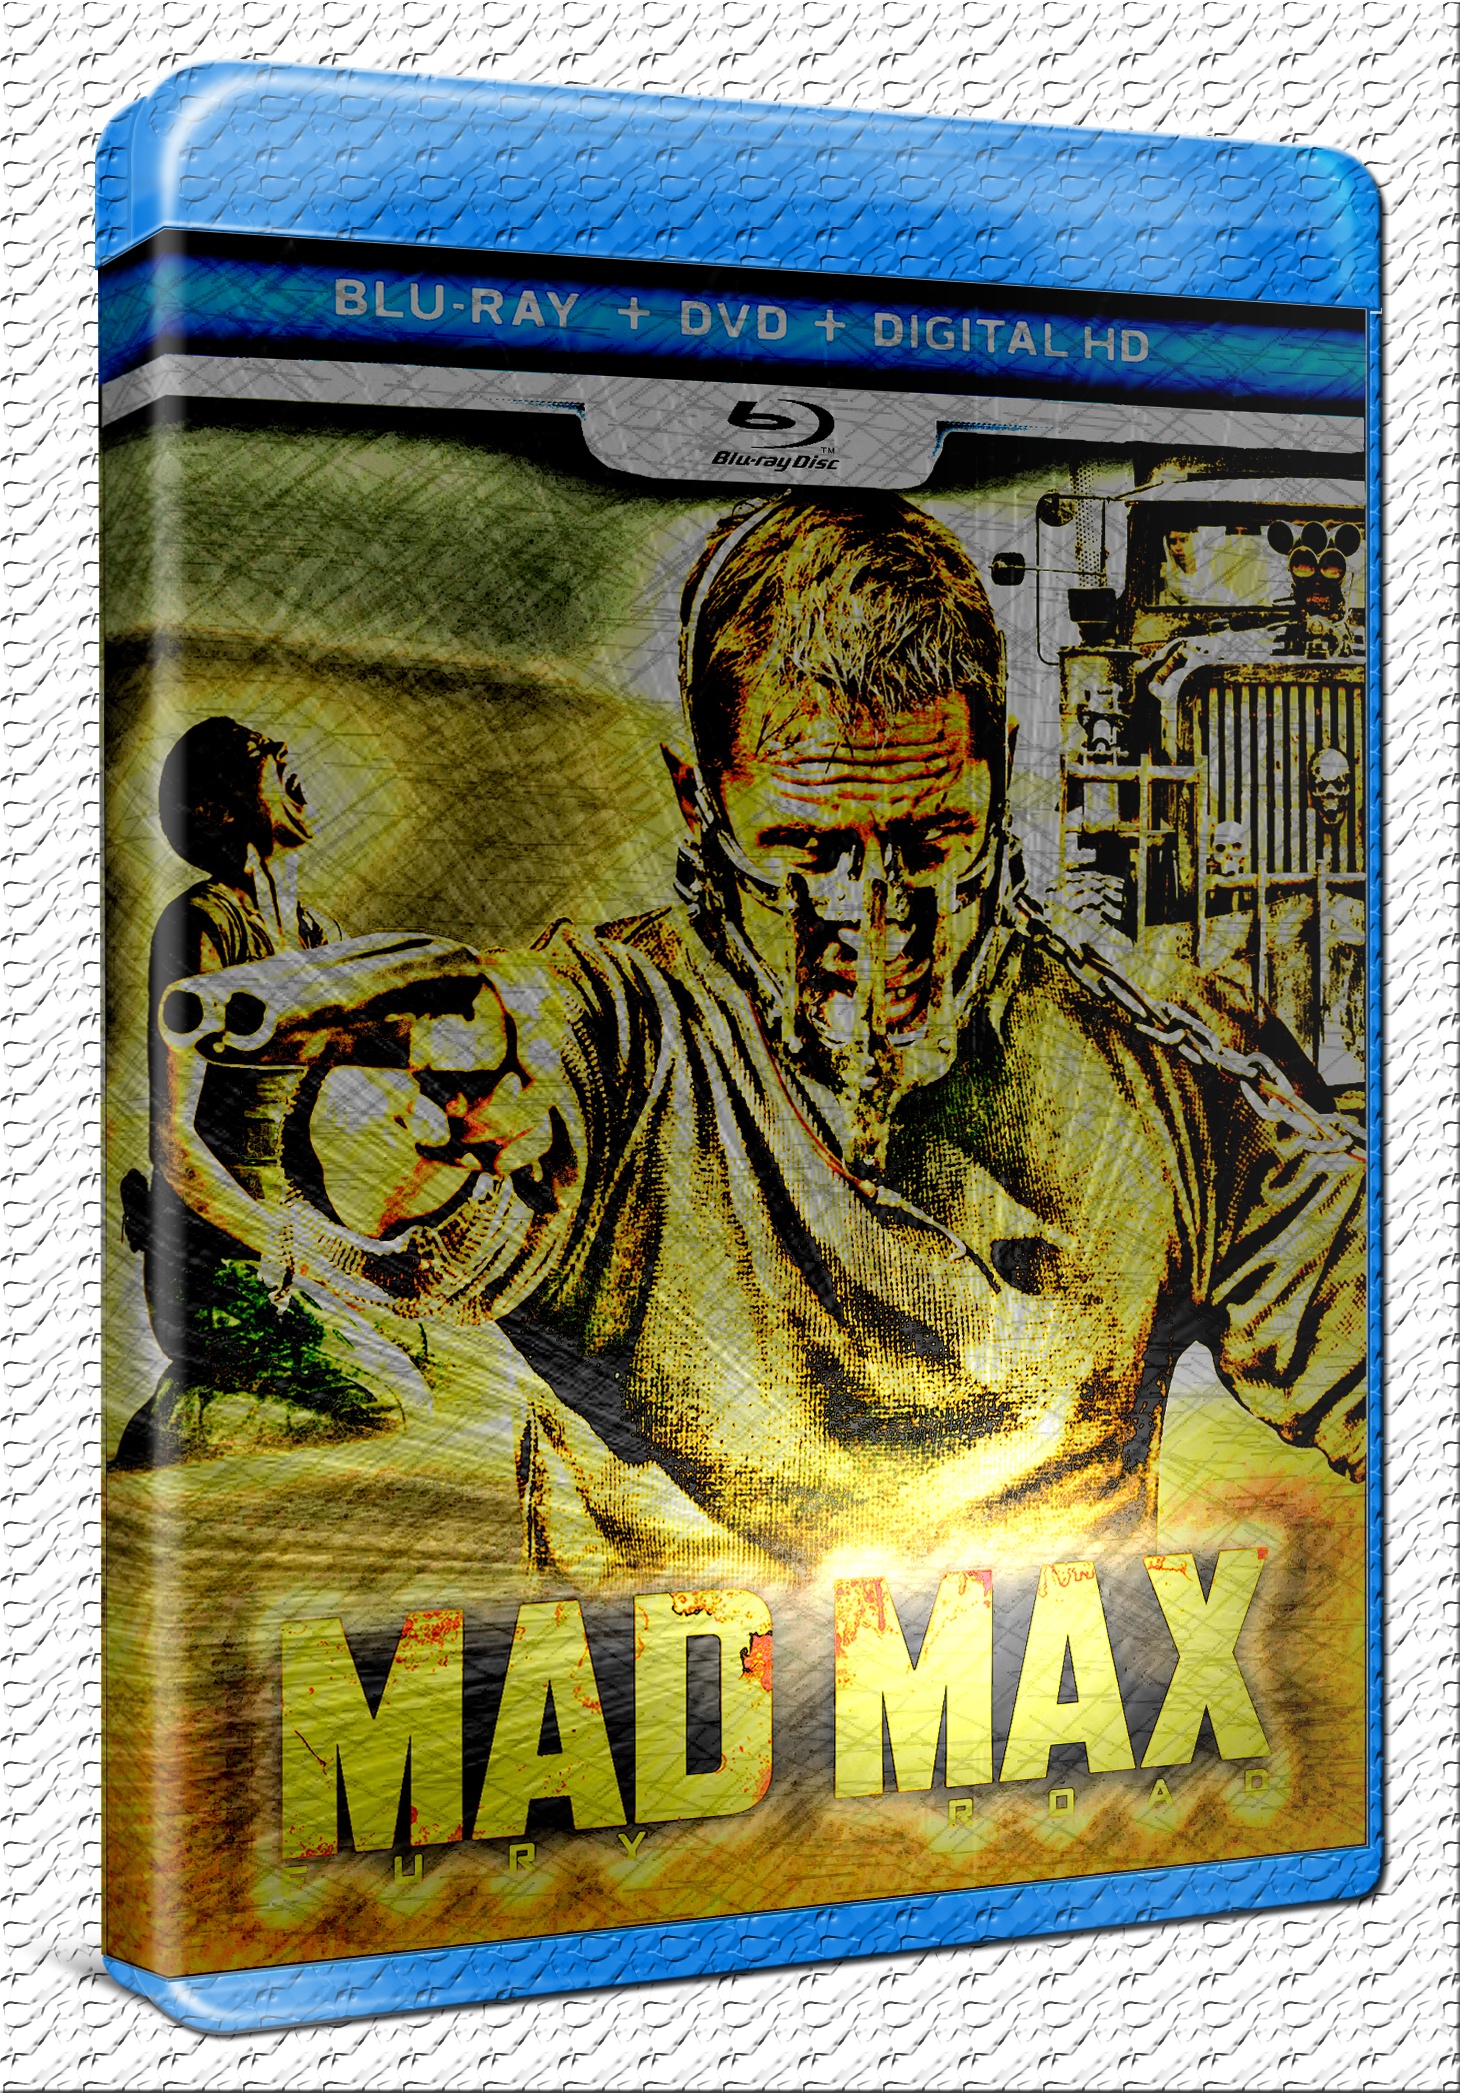 Mad Max: Fury Road box cover